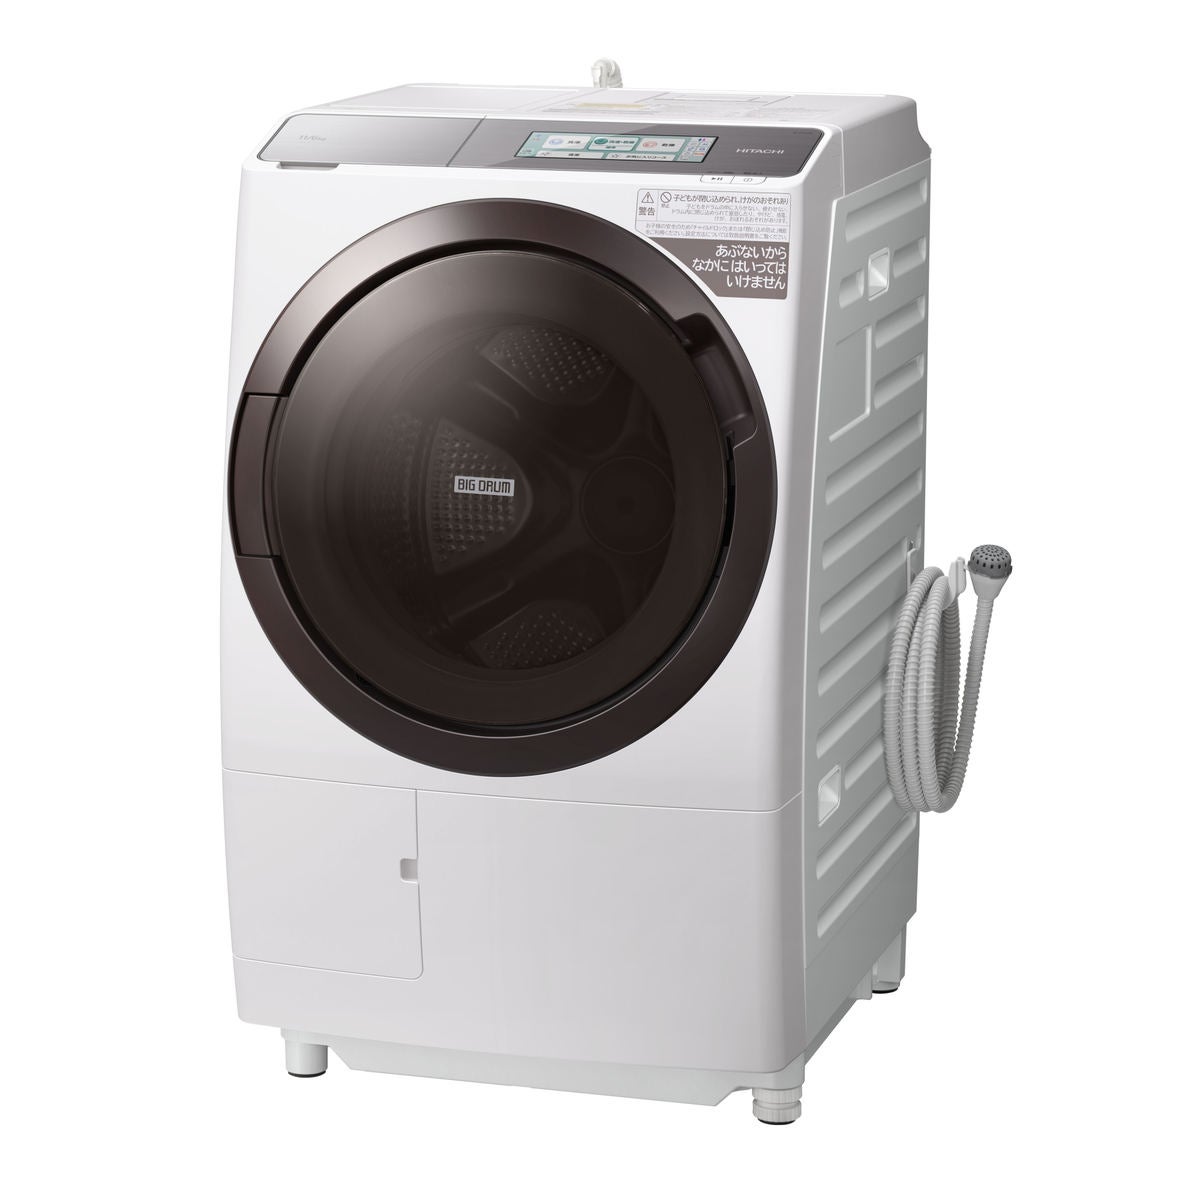 Panasonicドラム式洗濯機 NA-VX9600 2016年式液晶パネル❗ - 洗濯機